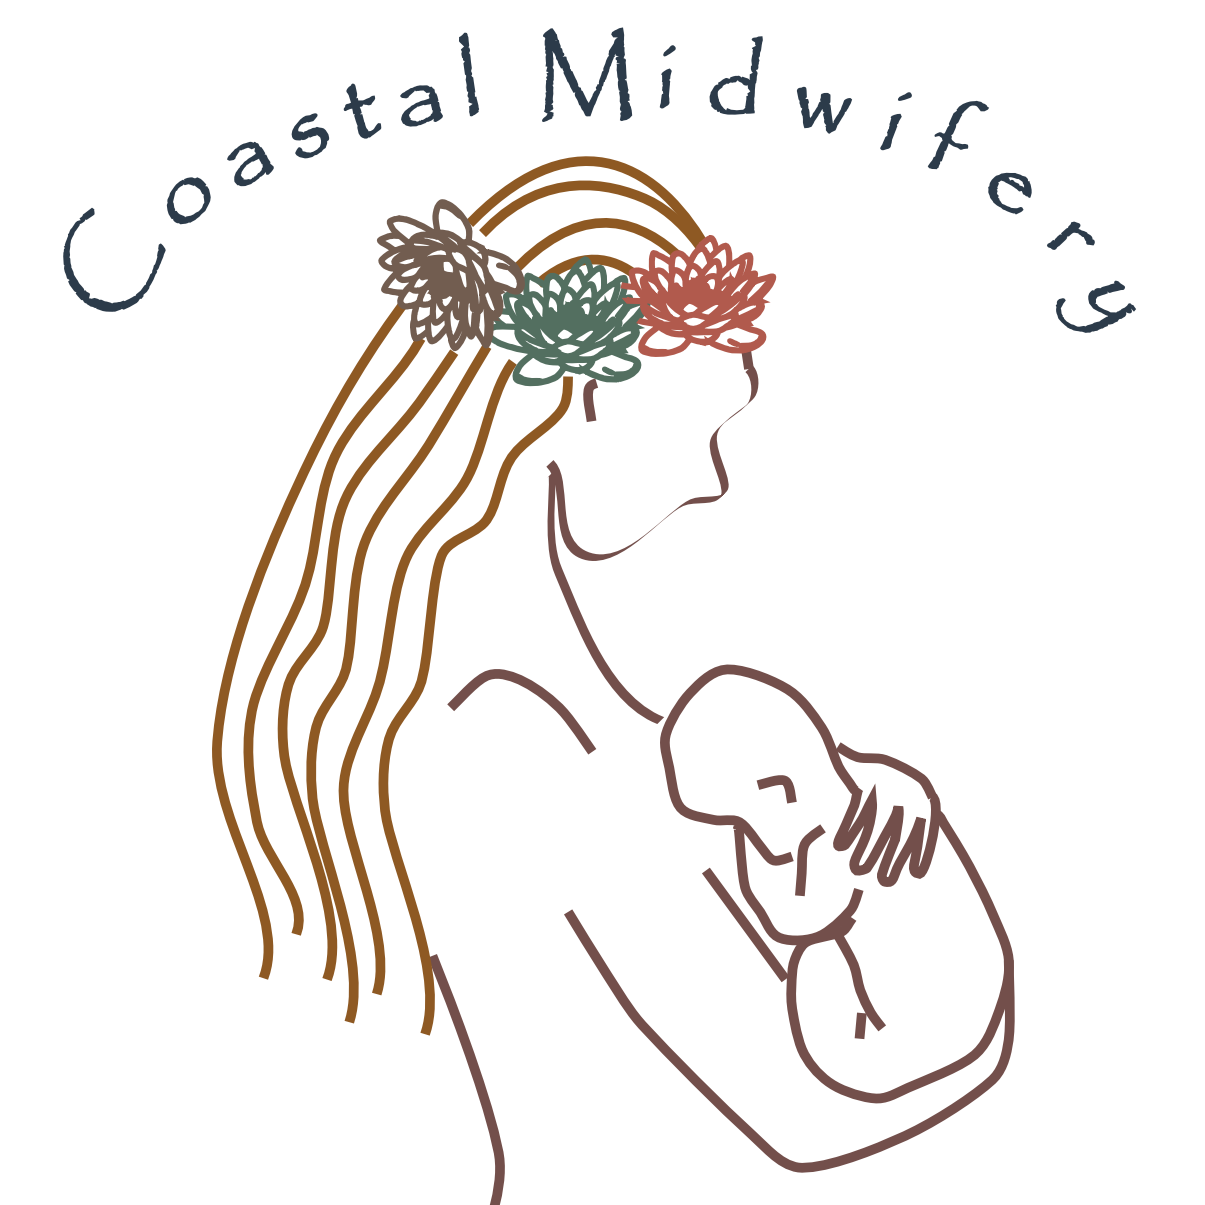 Coastal Midwifery